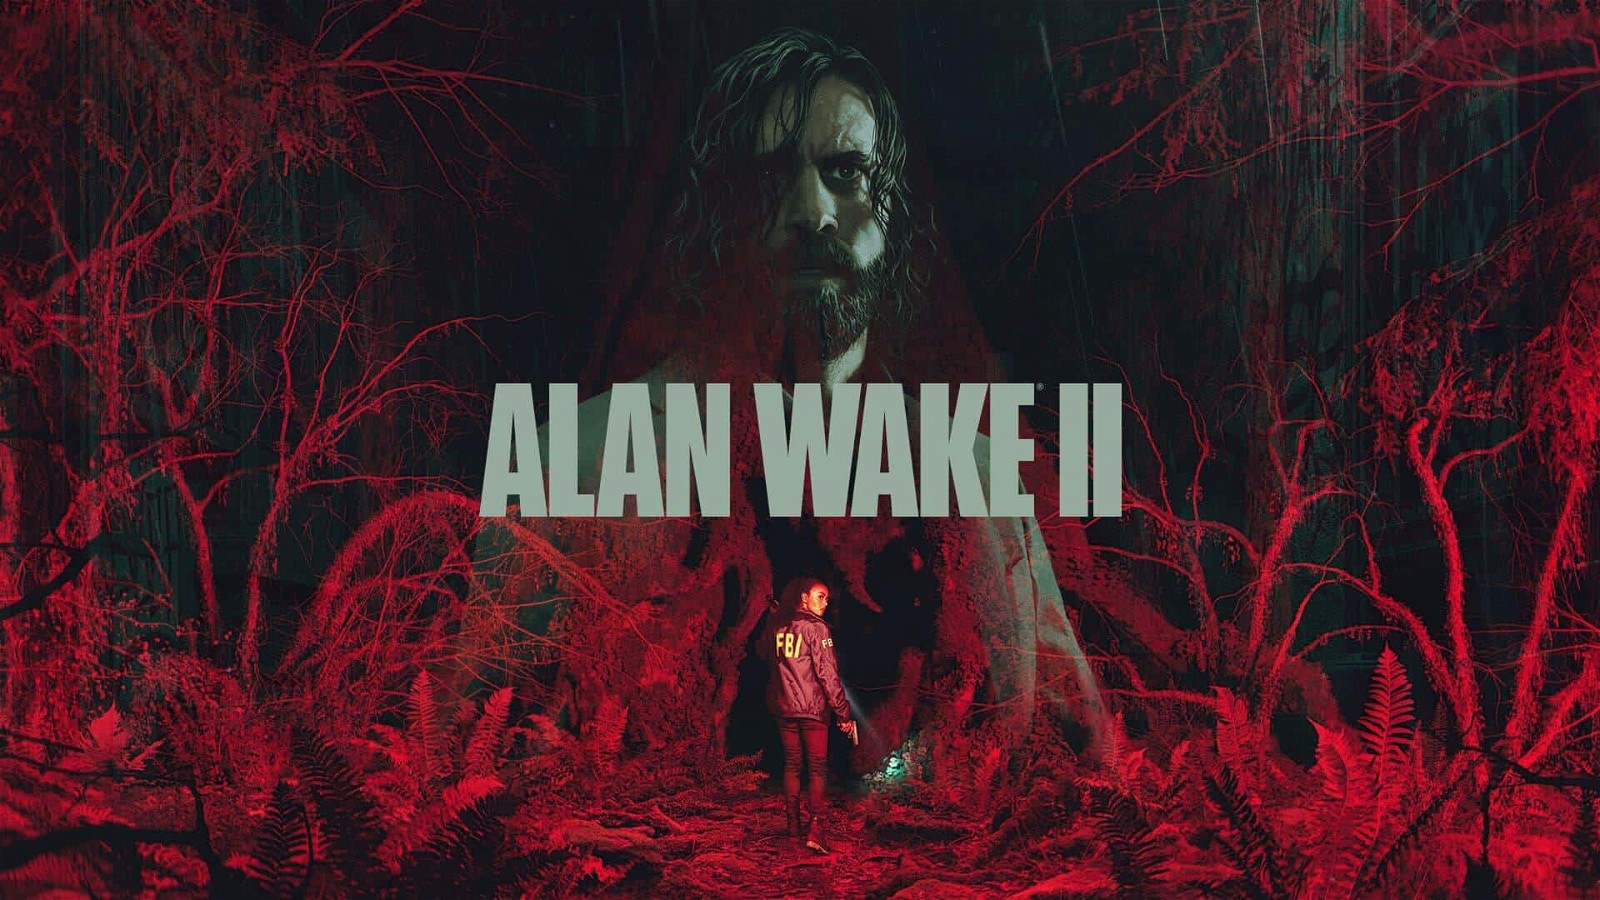 Official artwork for Alan Wake 2.